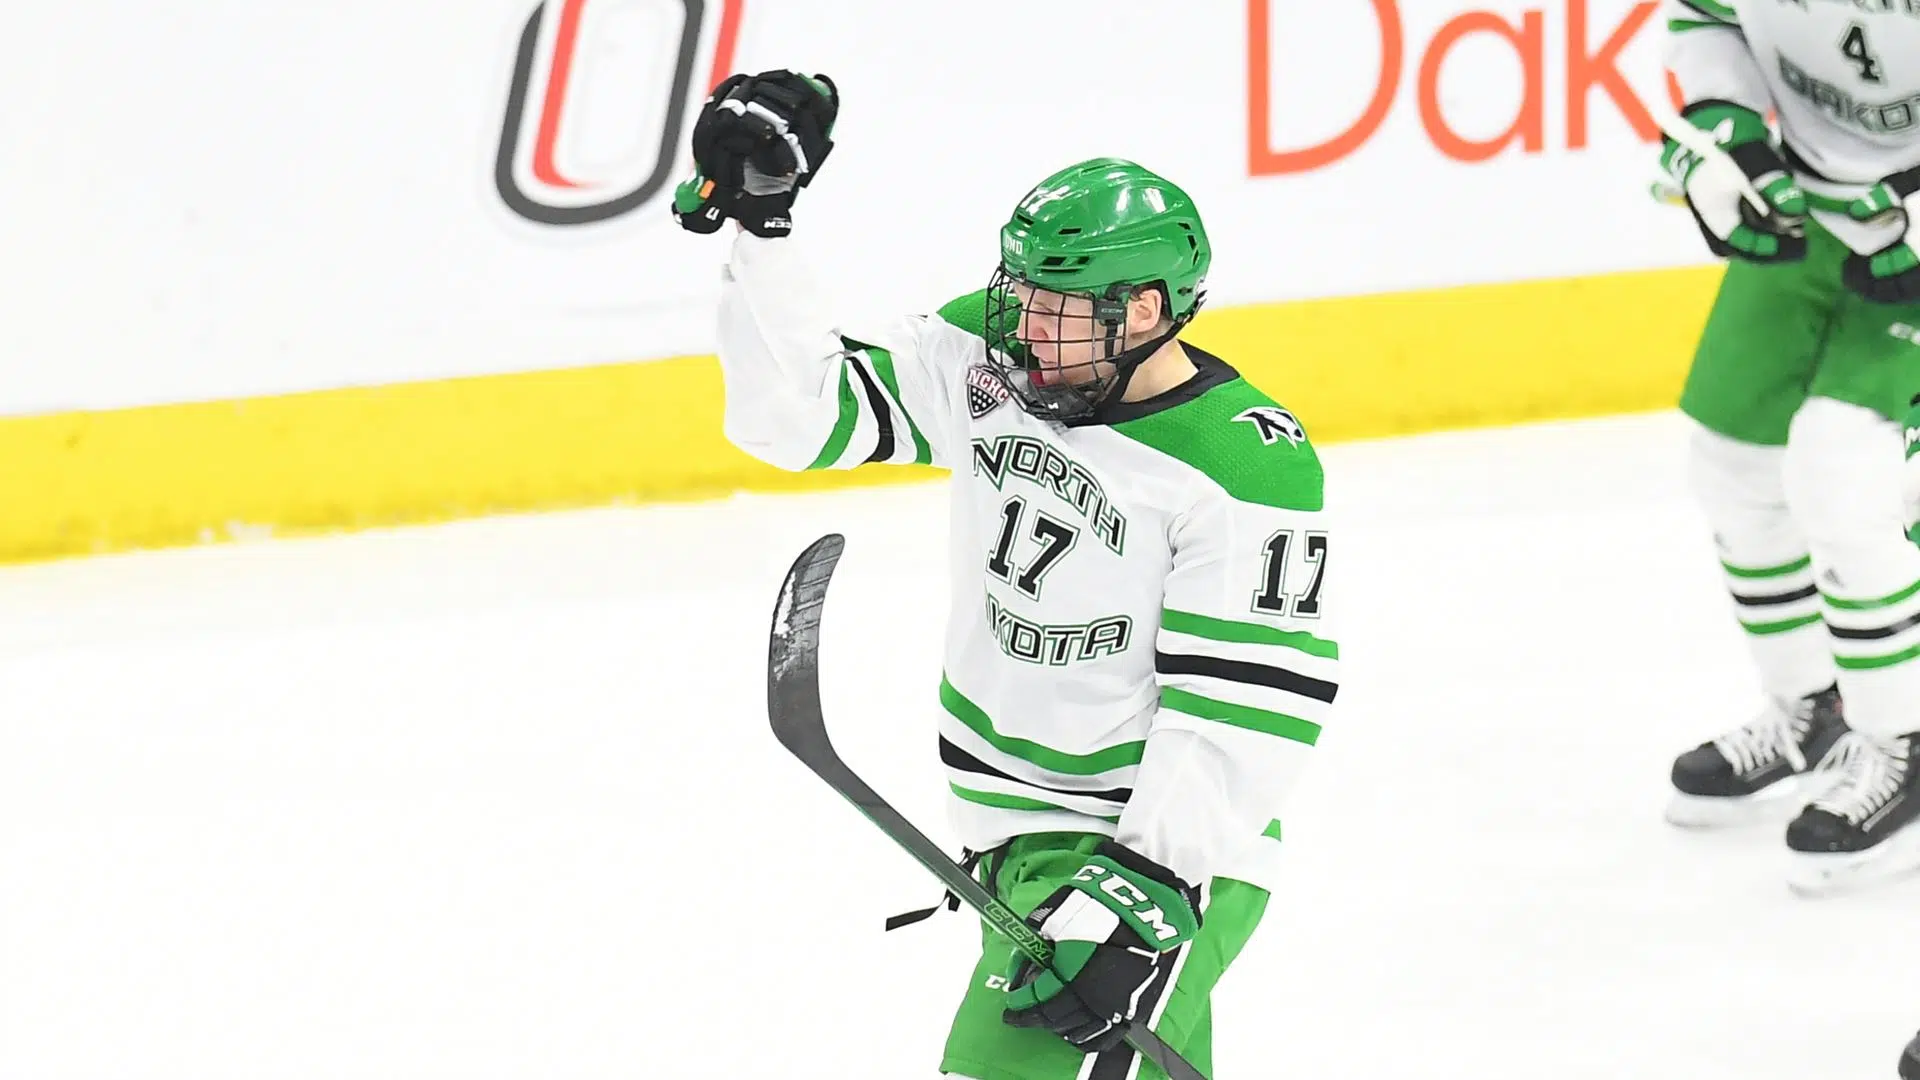 Riese Gaber named captain of University of North Dakota hockey